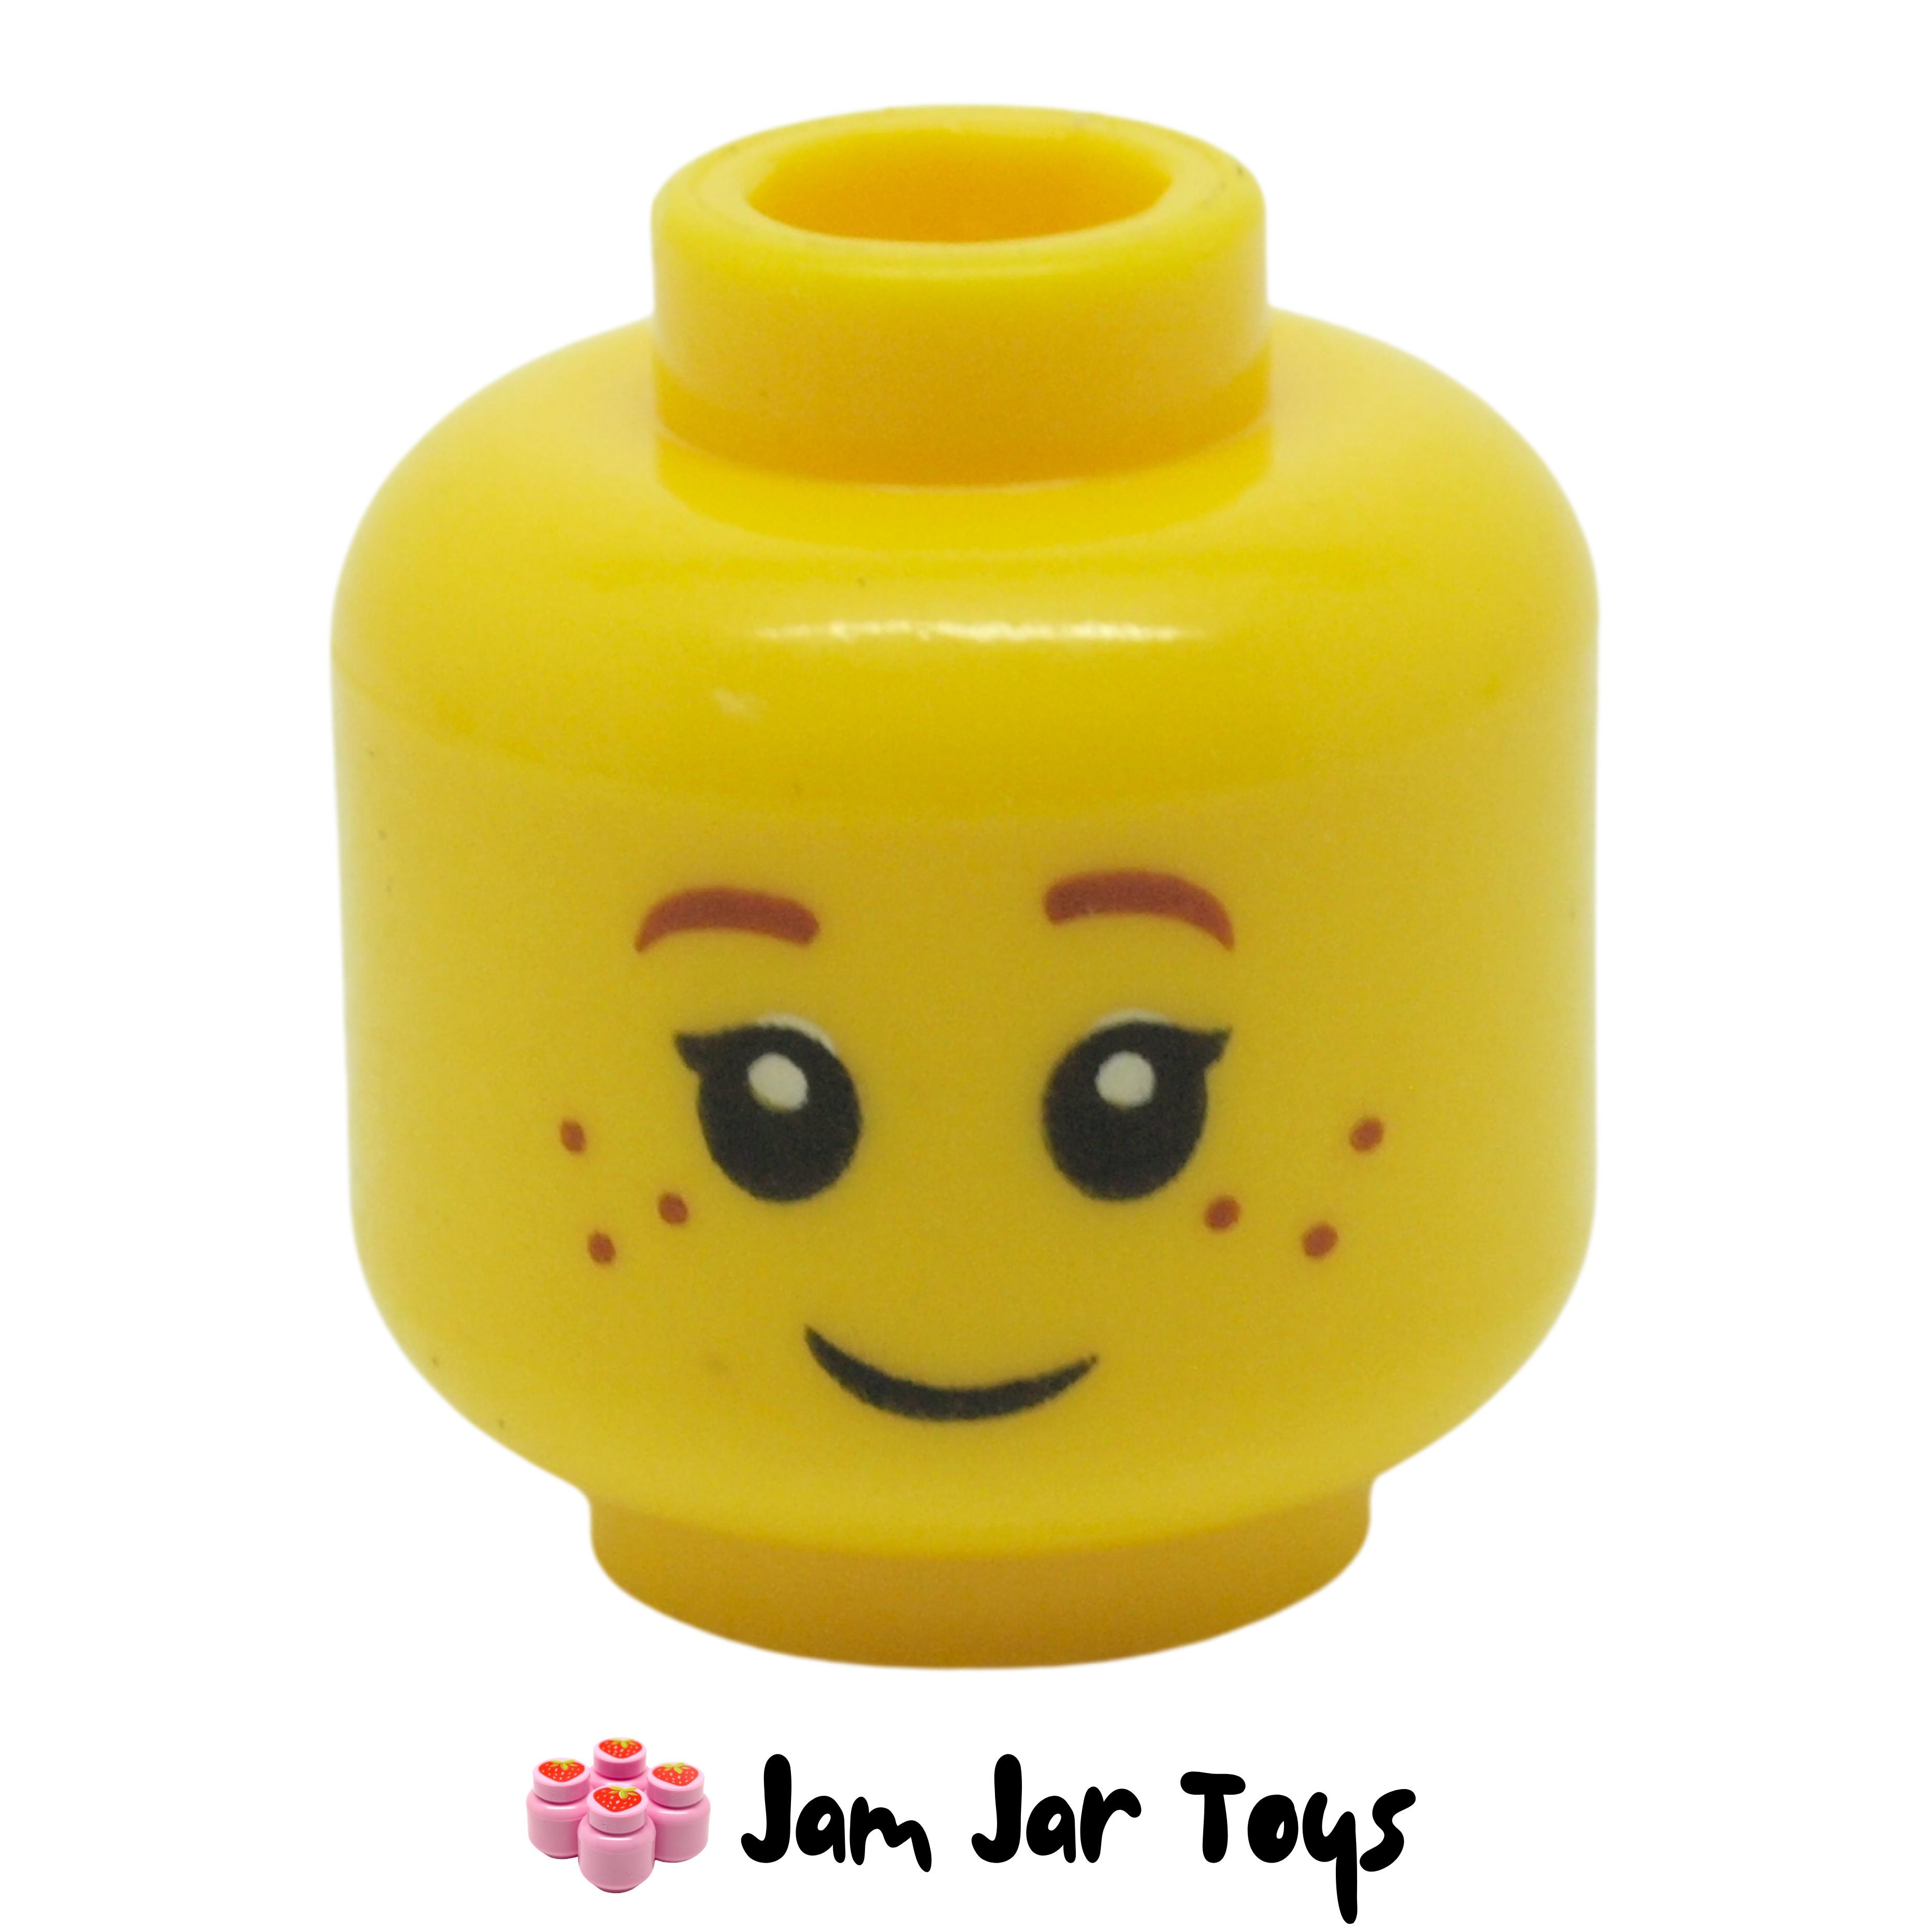 LEGO Head Hair Yellow MINIFGURE HEAD Happy DUAL SIDED Eyelashes Female Freckles